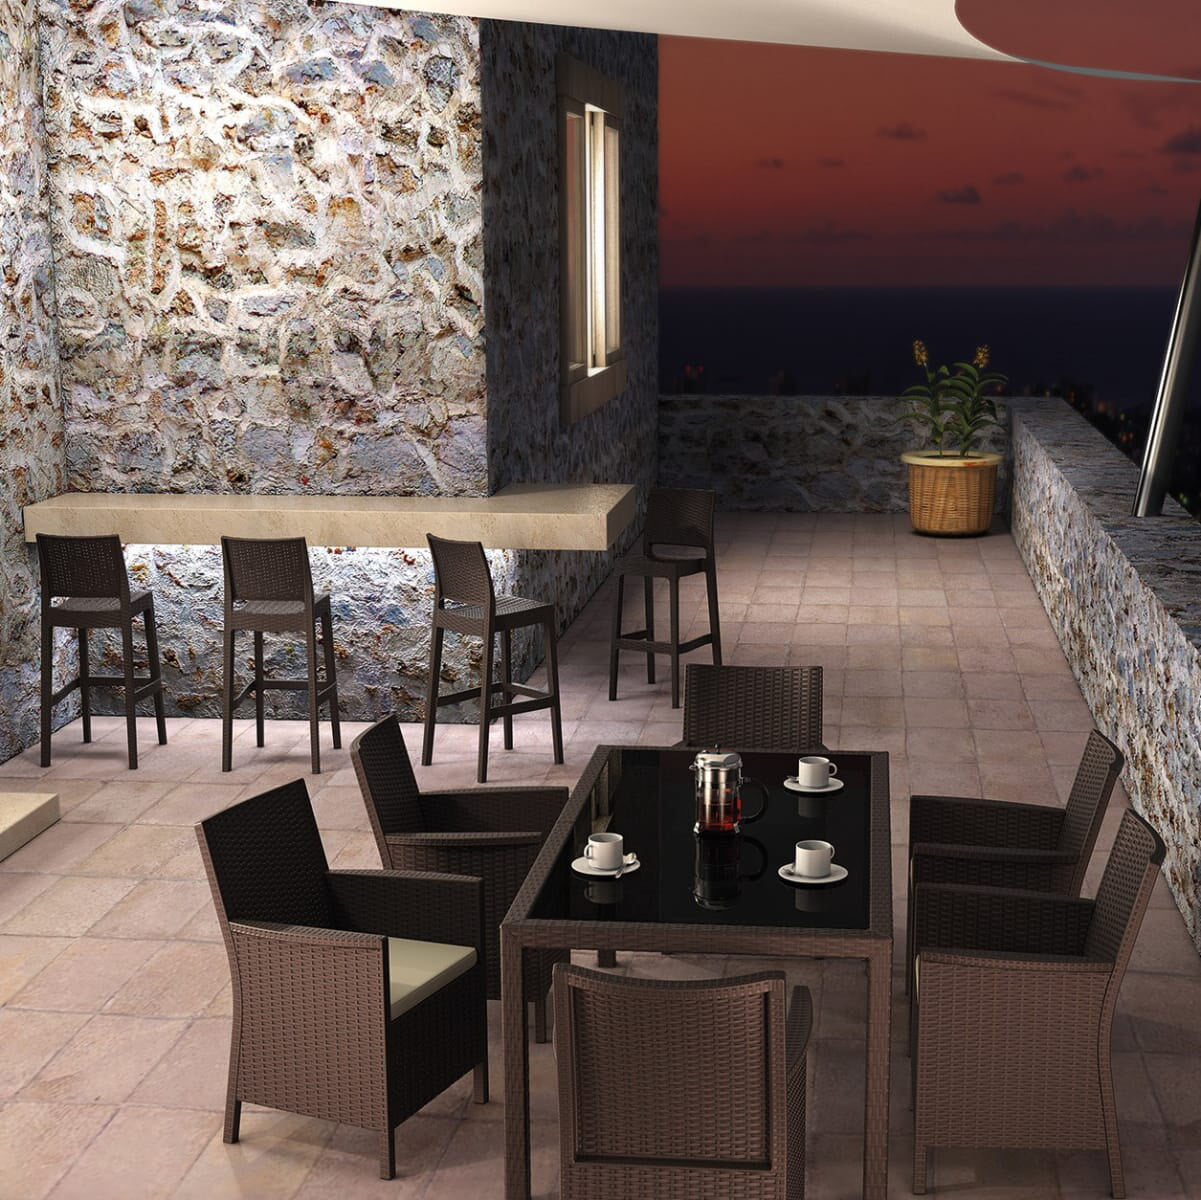 Garbar Pacific rectangular table indoors, outdoors 180x90